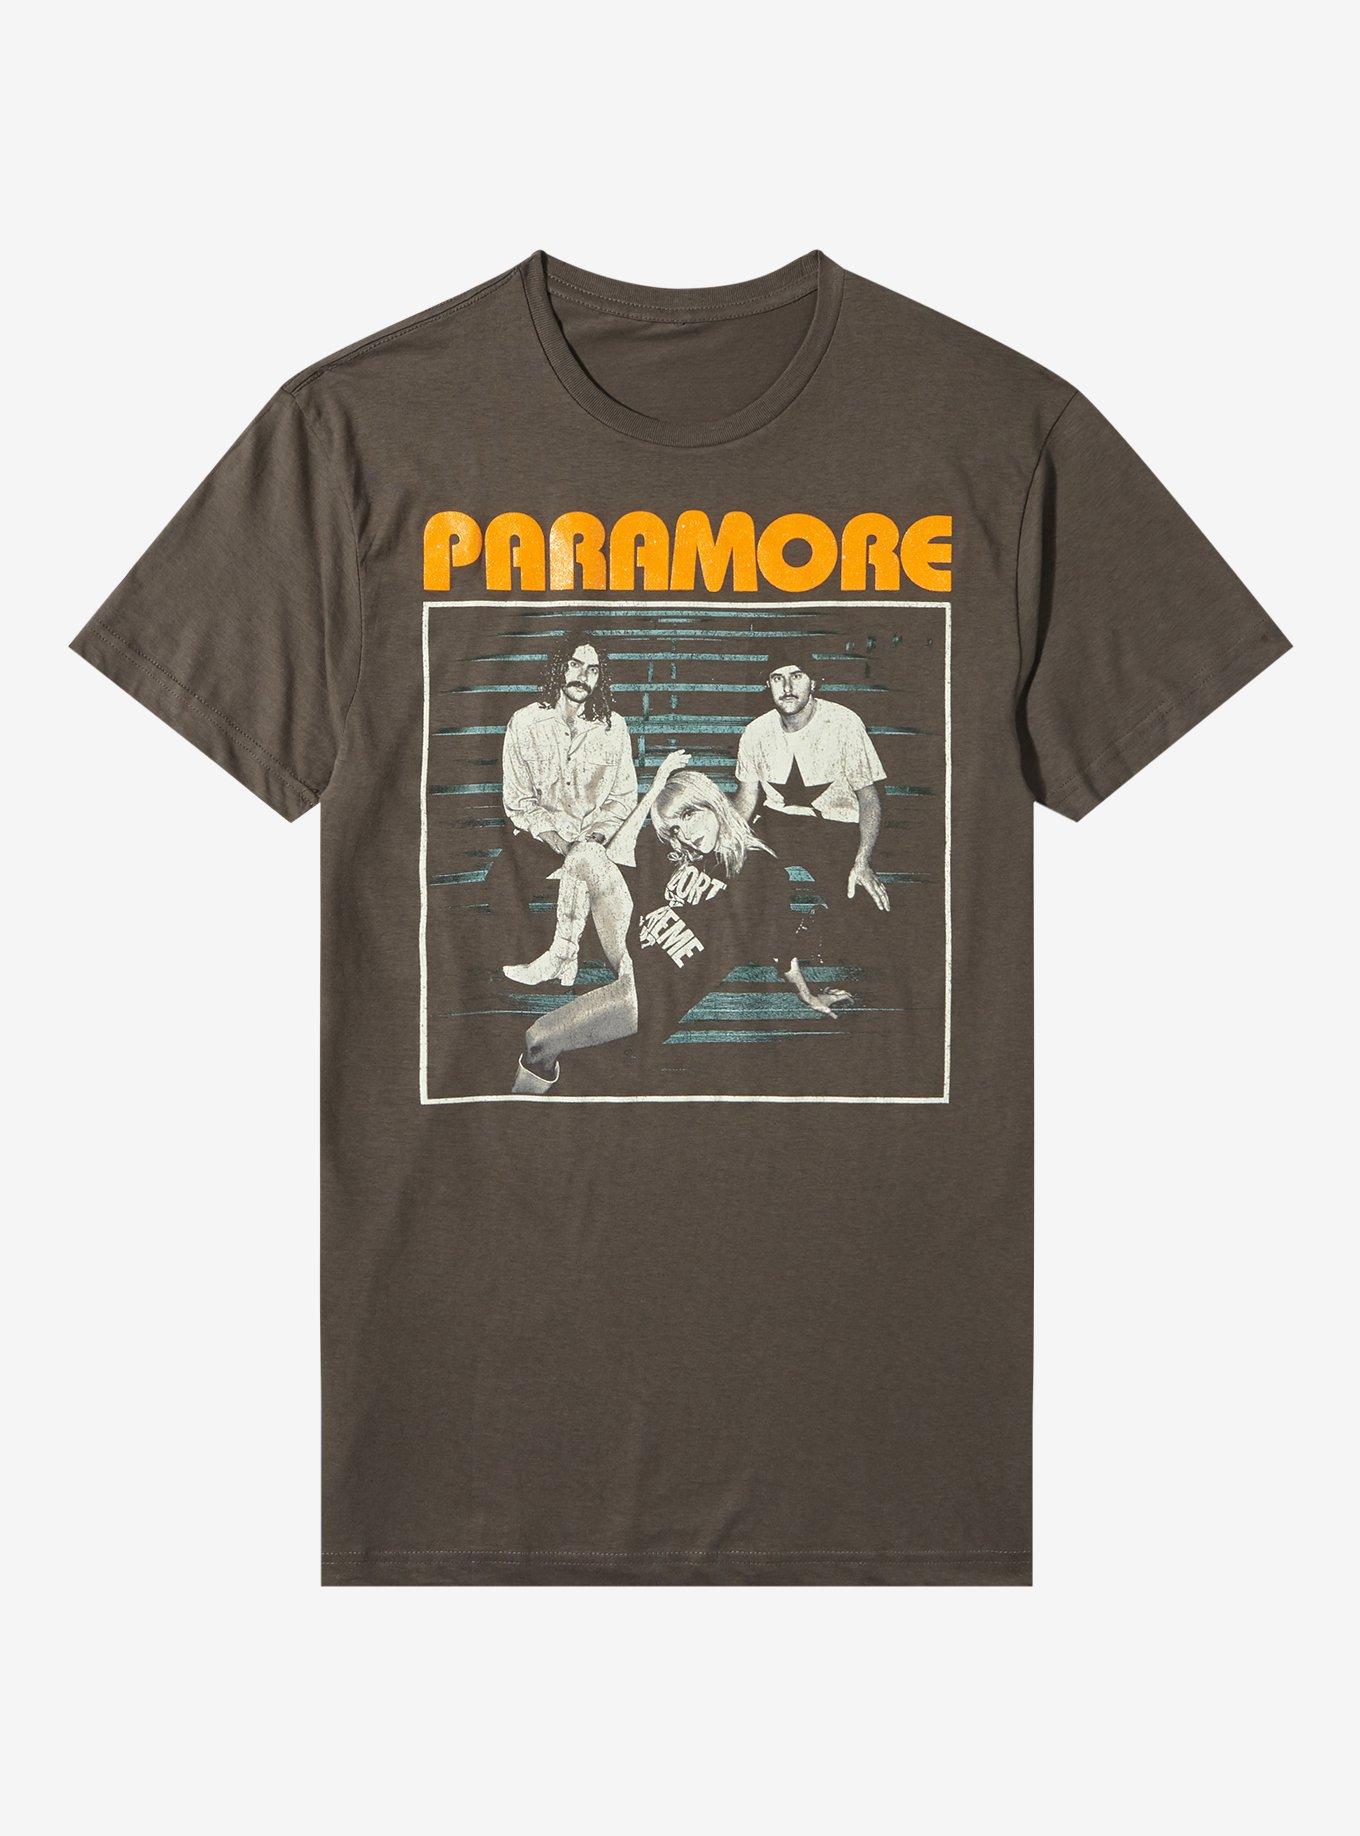 Paramore Head Bang Boyfriend Fit Girls T-Shirt